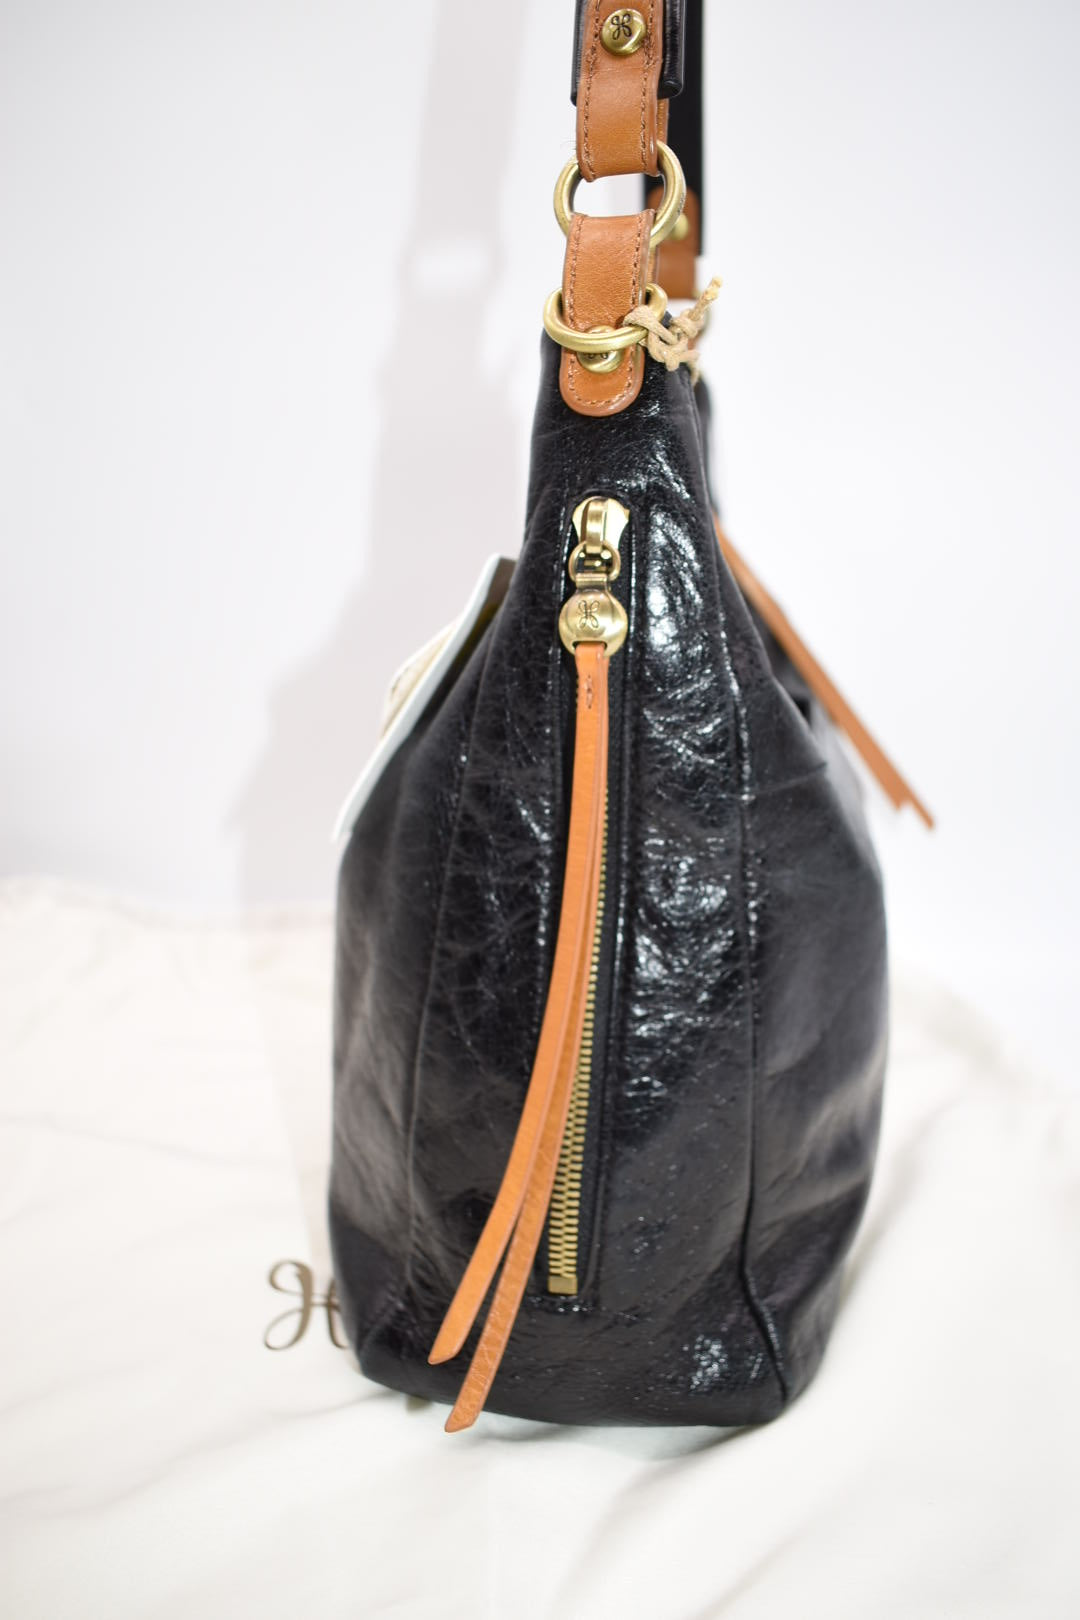 Hobo Delilah Convertible Crossbody Shoulder Bag in Black